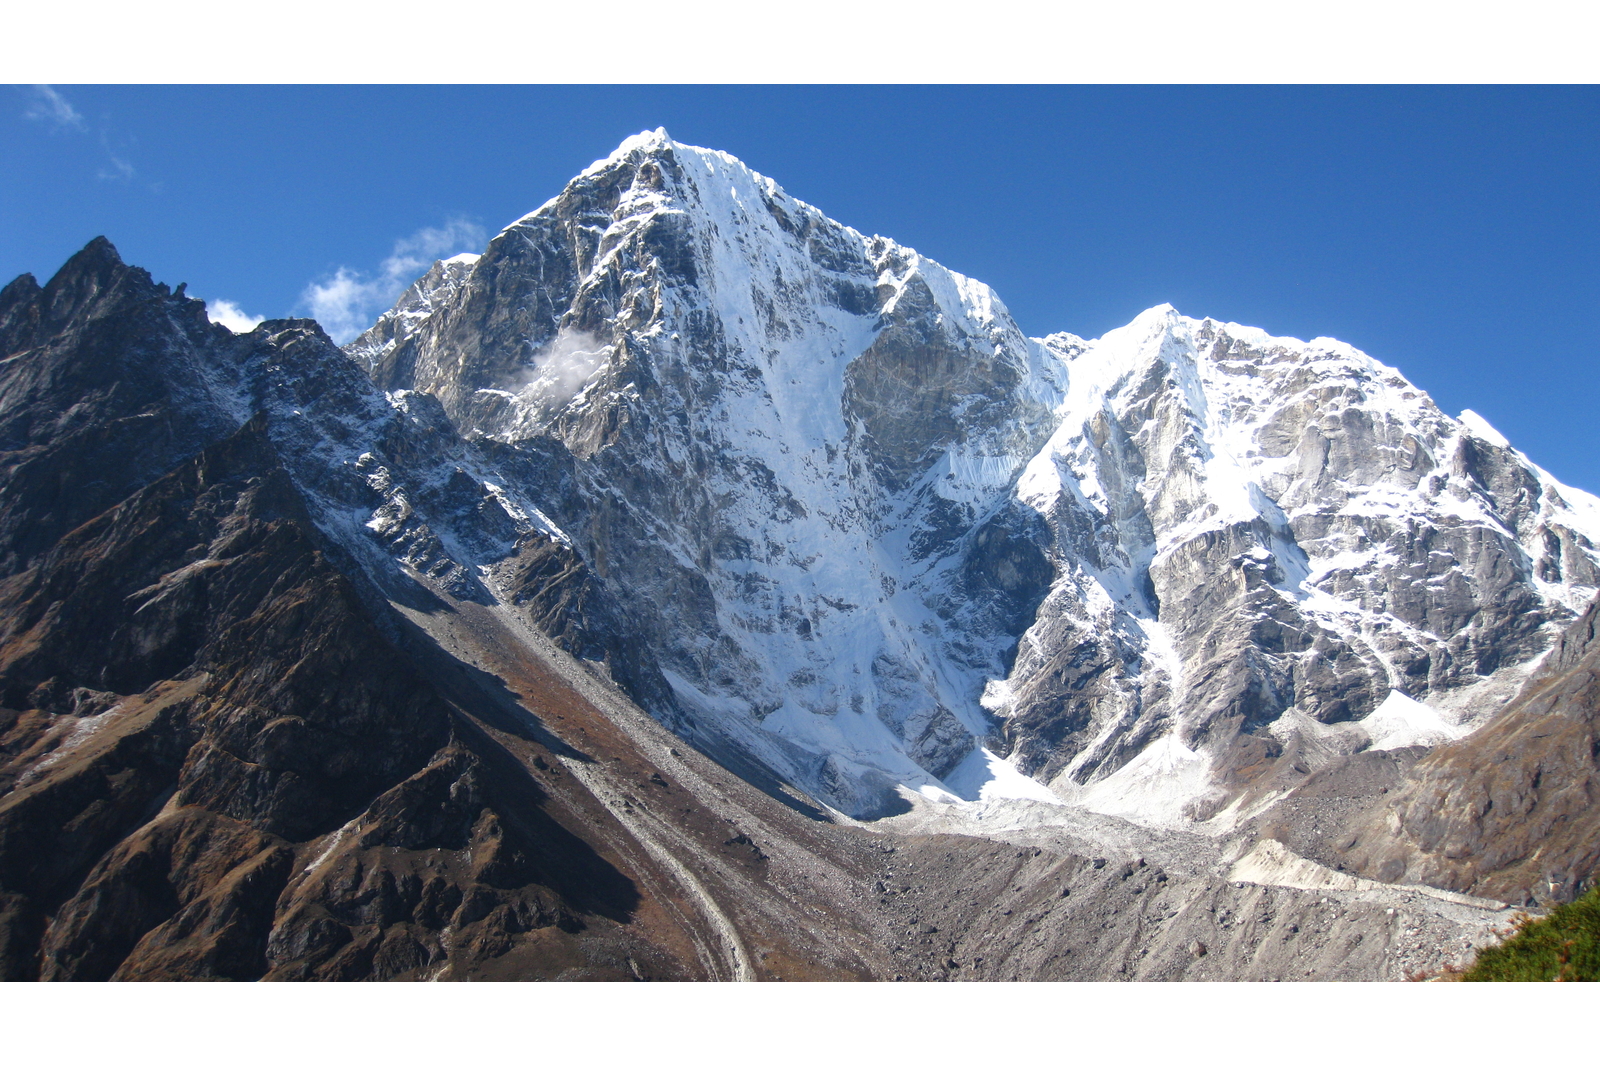 Everest Base Camp Trek via Jiri, EBC Trekking with Jiri, Mt. Everest